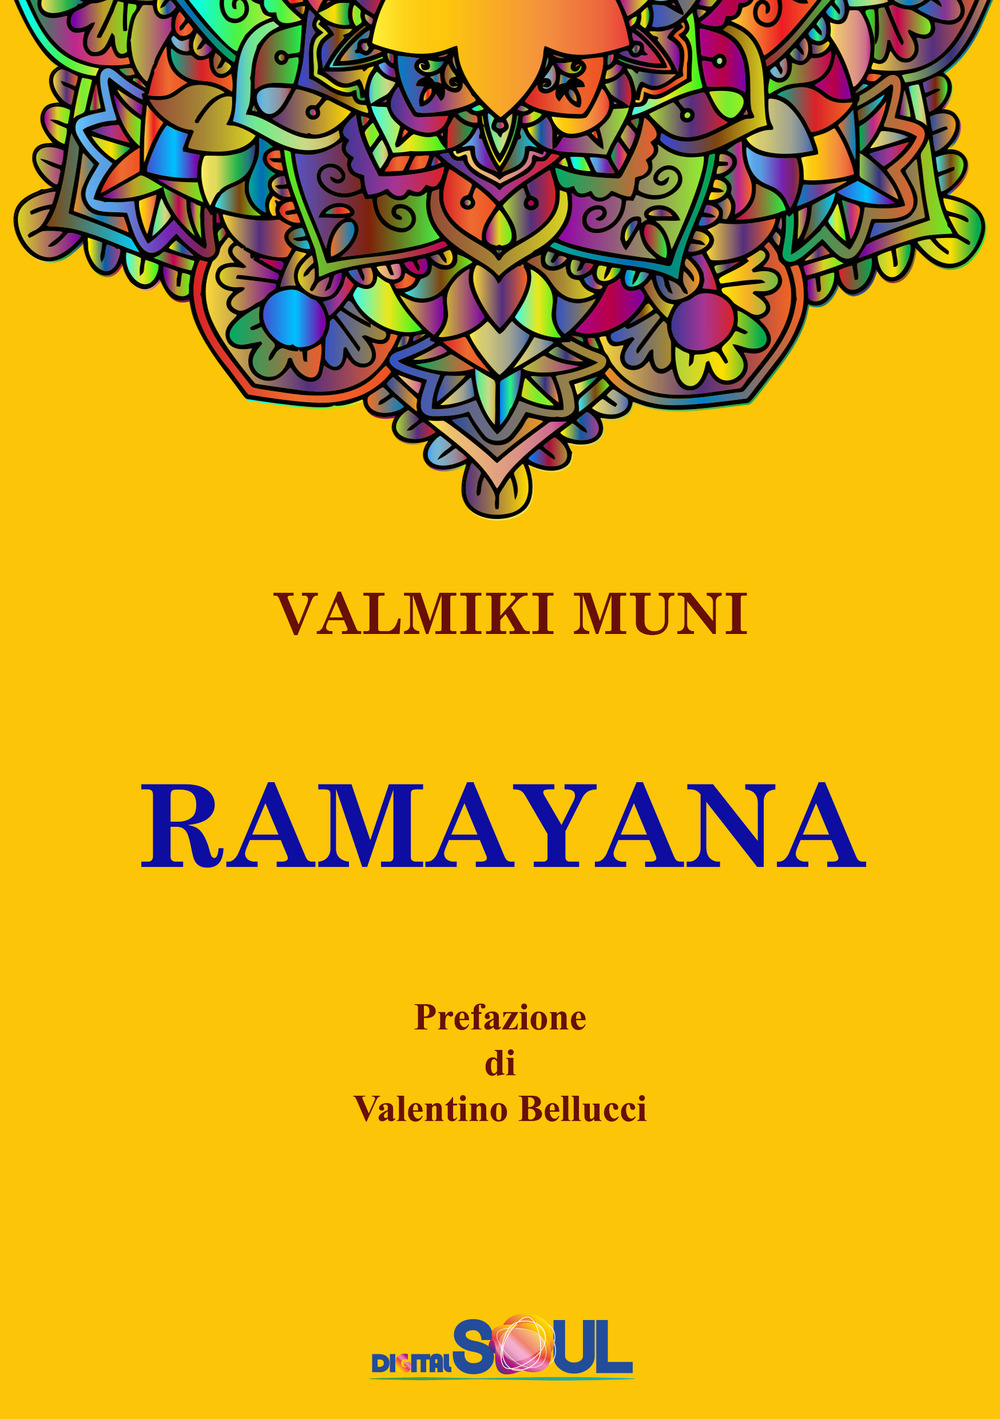 Ramayana. La storia dell'Avatara Sri Rama